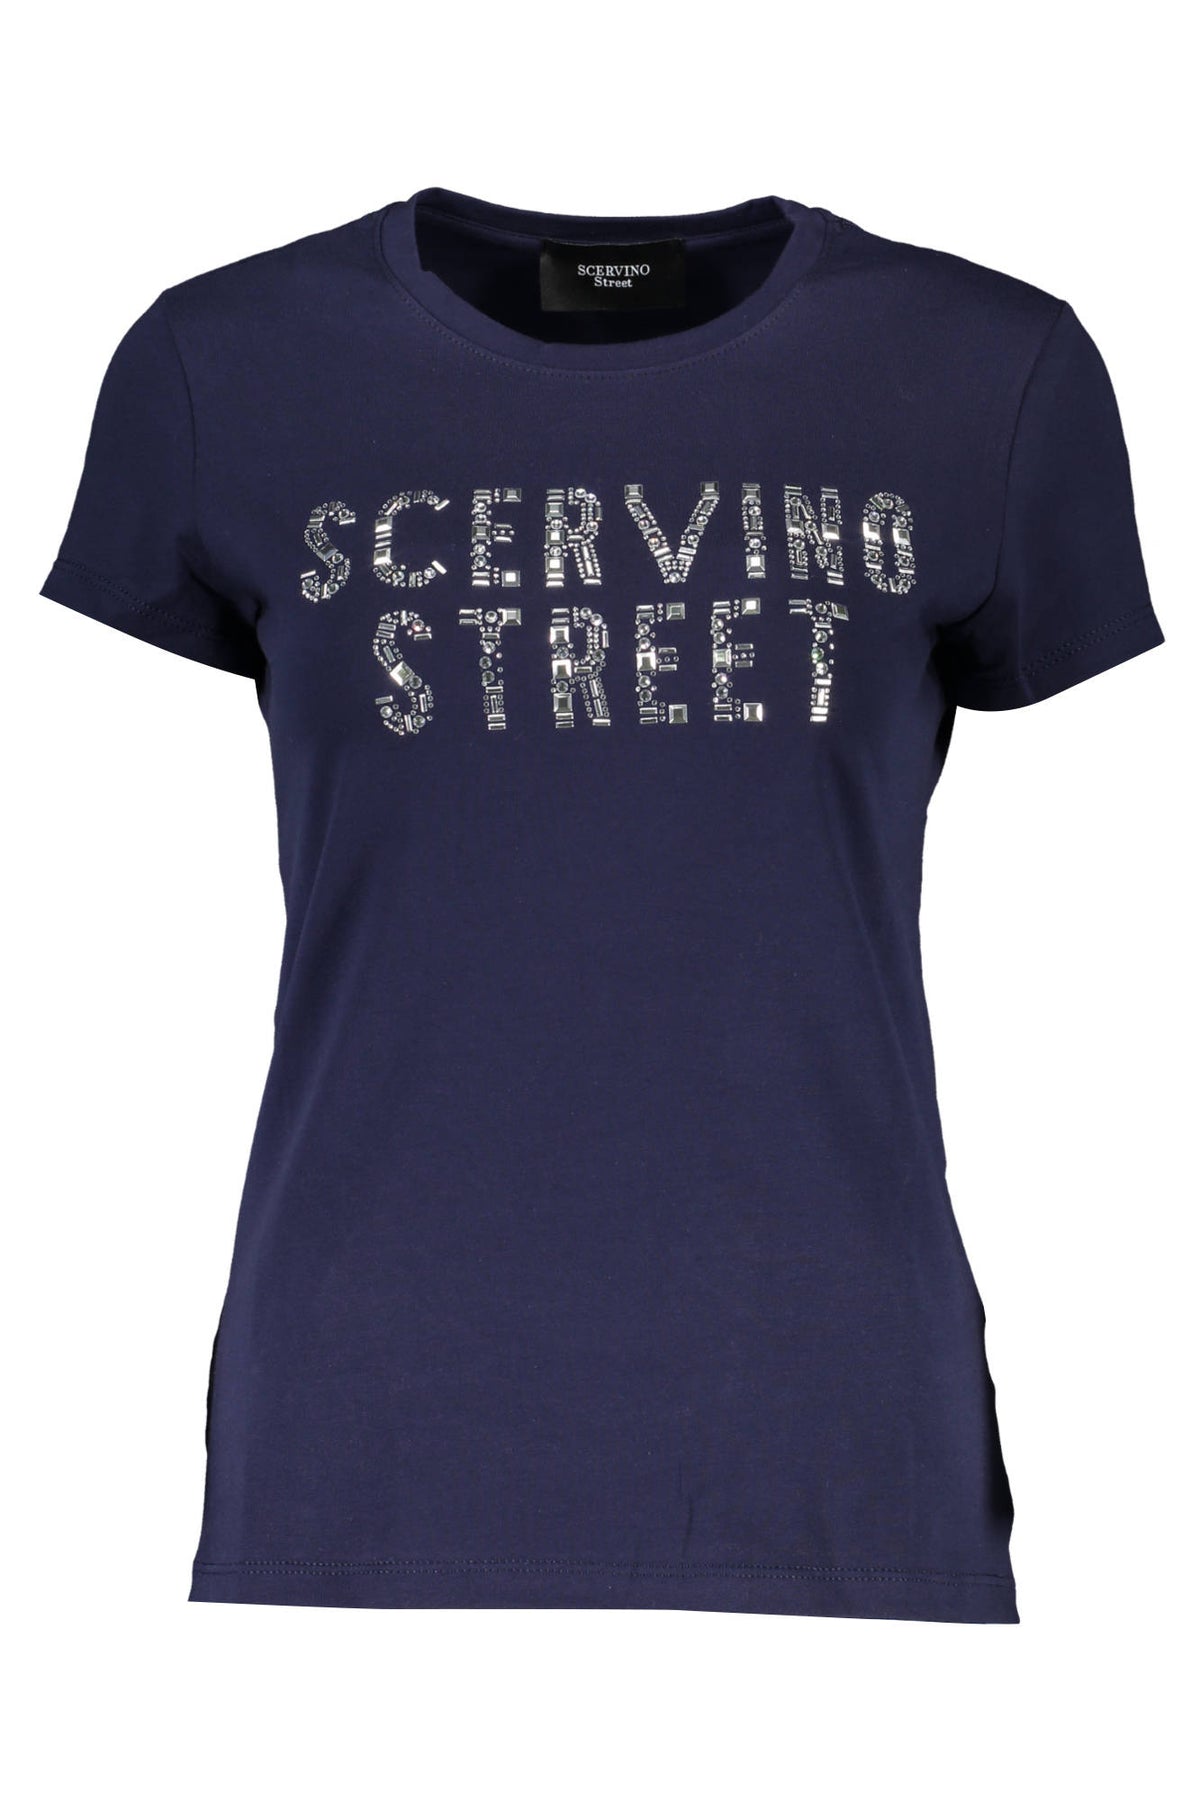 SCERVINO STREET Damen T-Shirt Shirt Sweatshirt Oberteil mit Rundhalsausschnitt, kurzärmlig